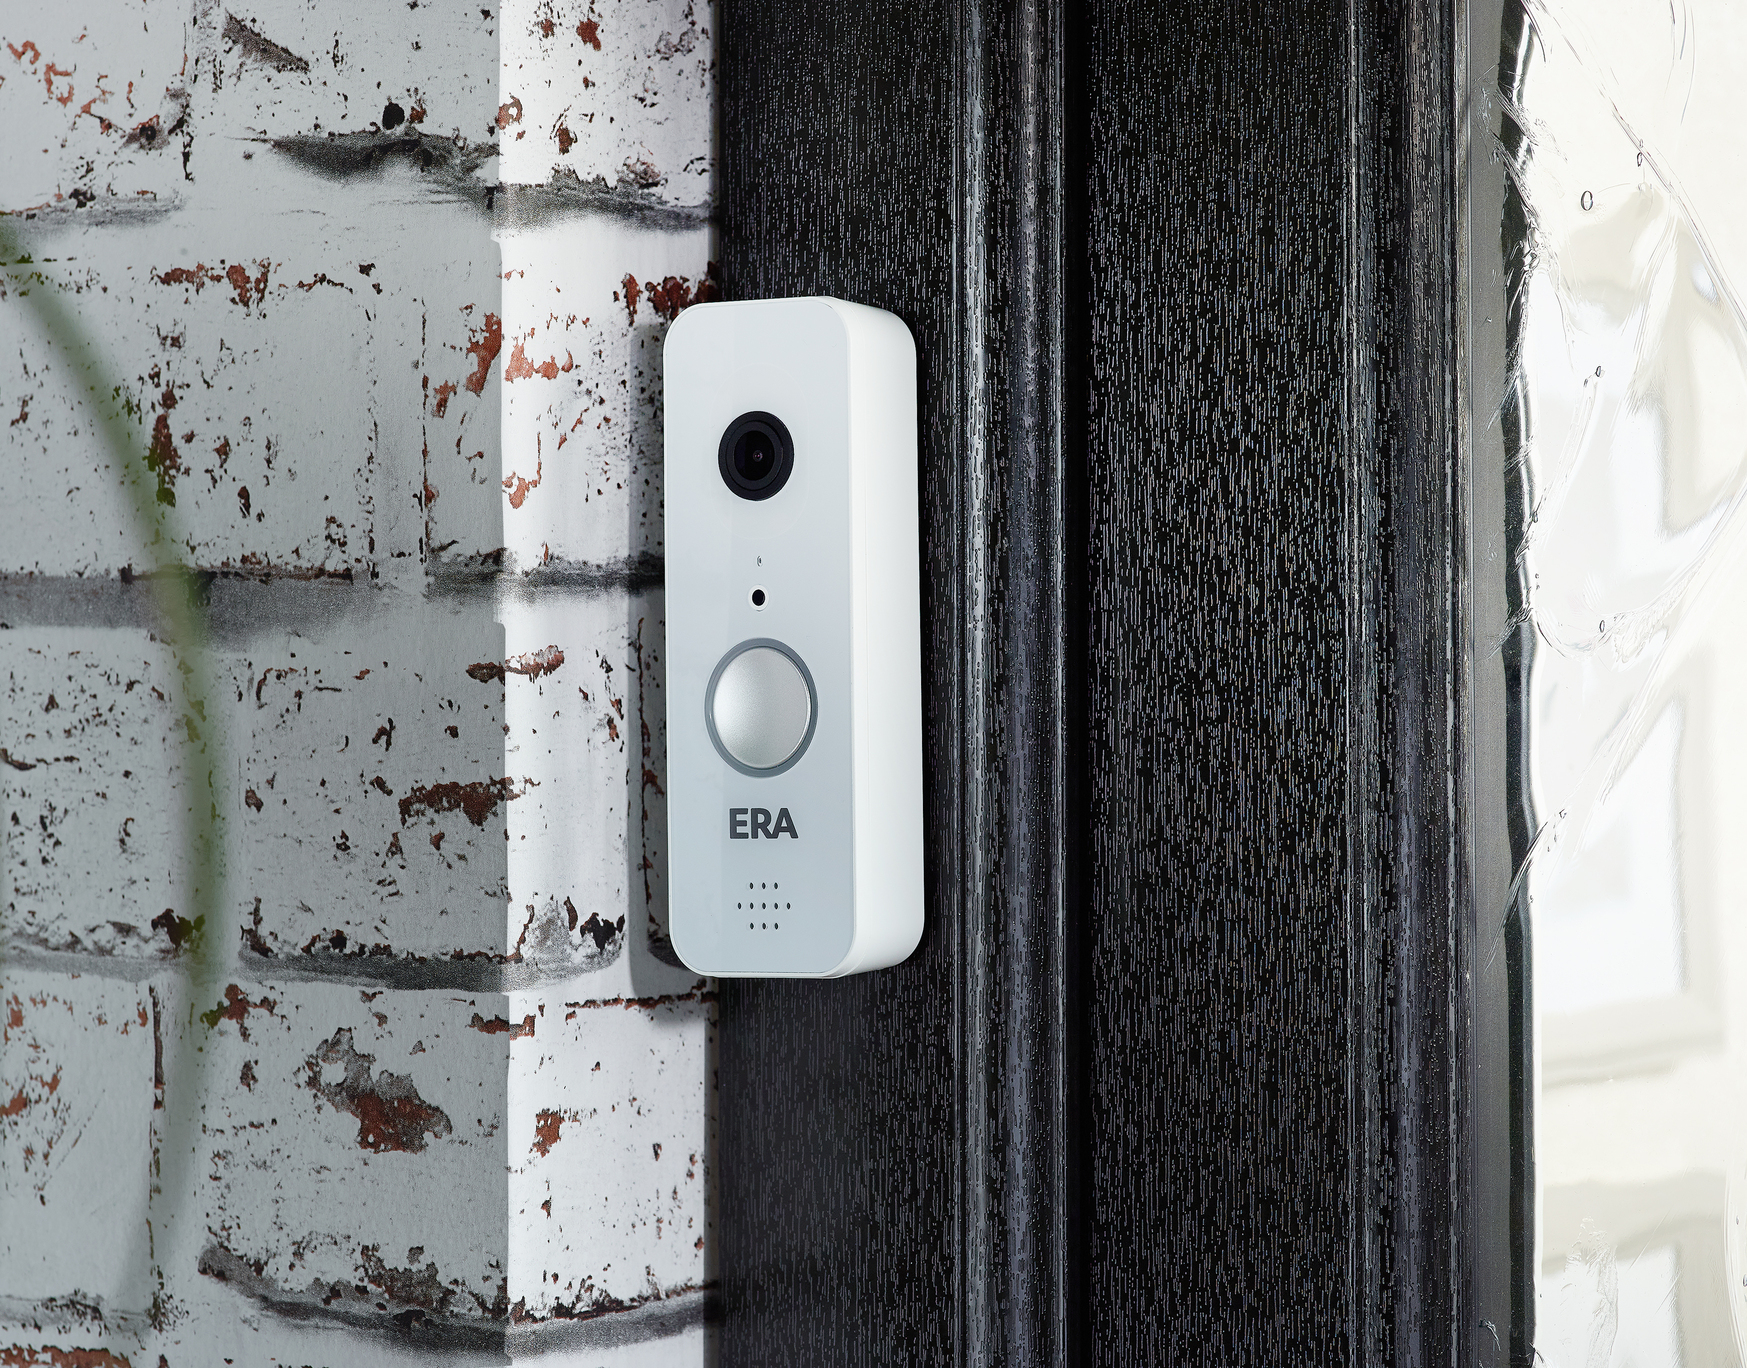 Doorbell with security camera